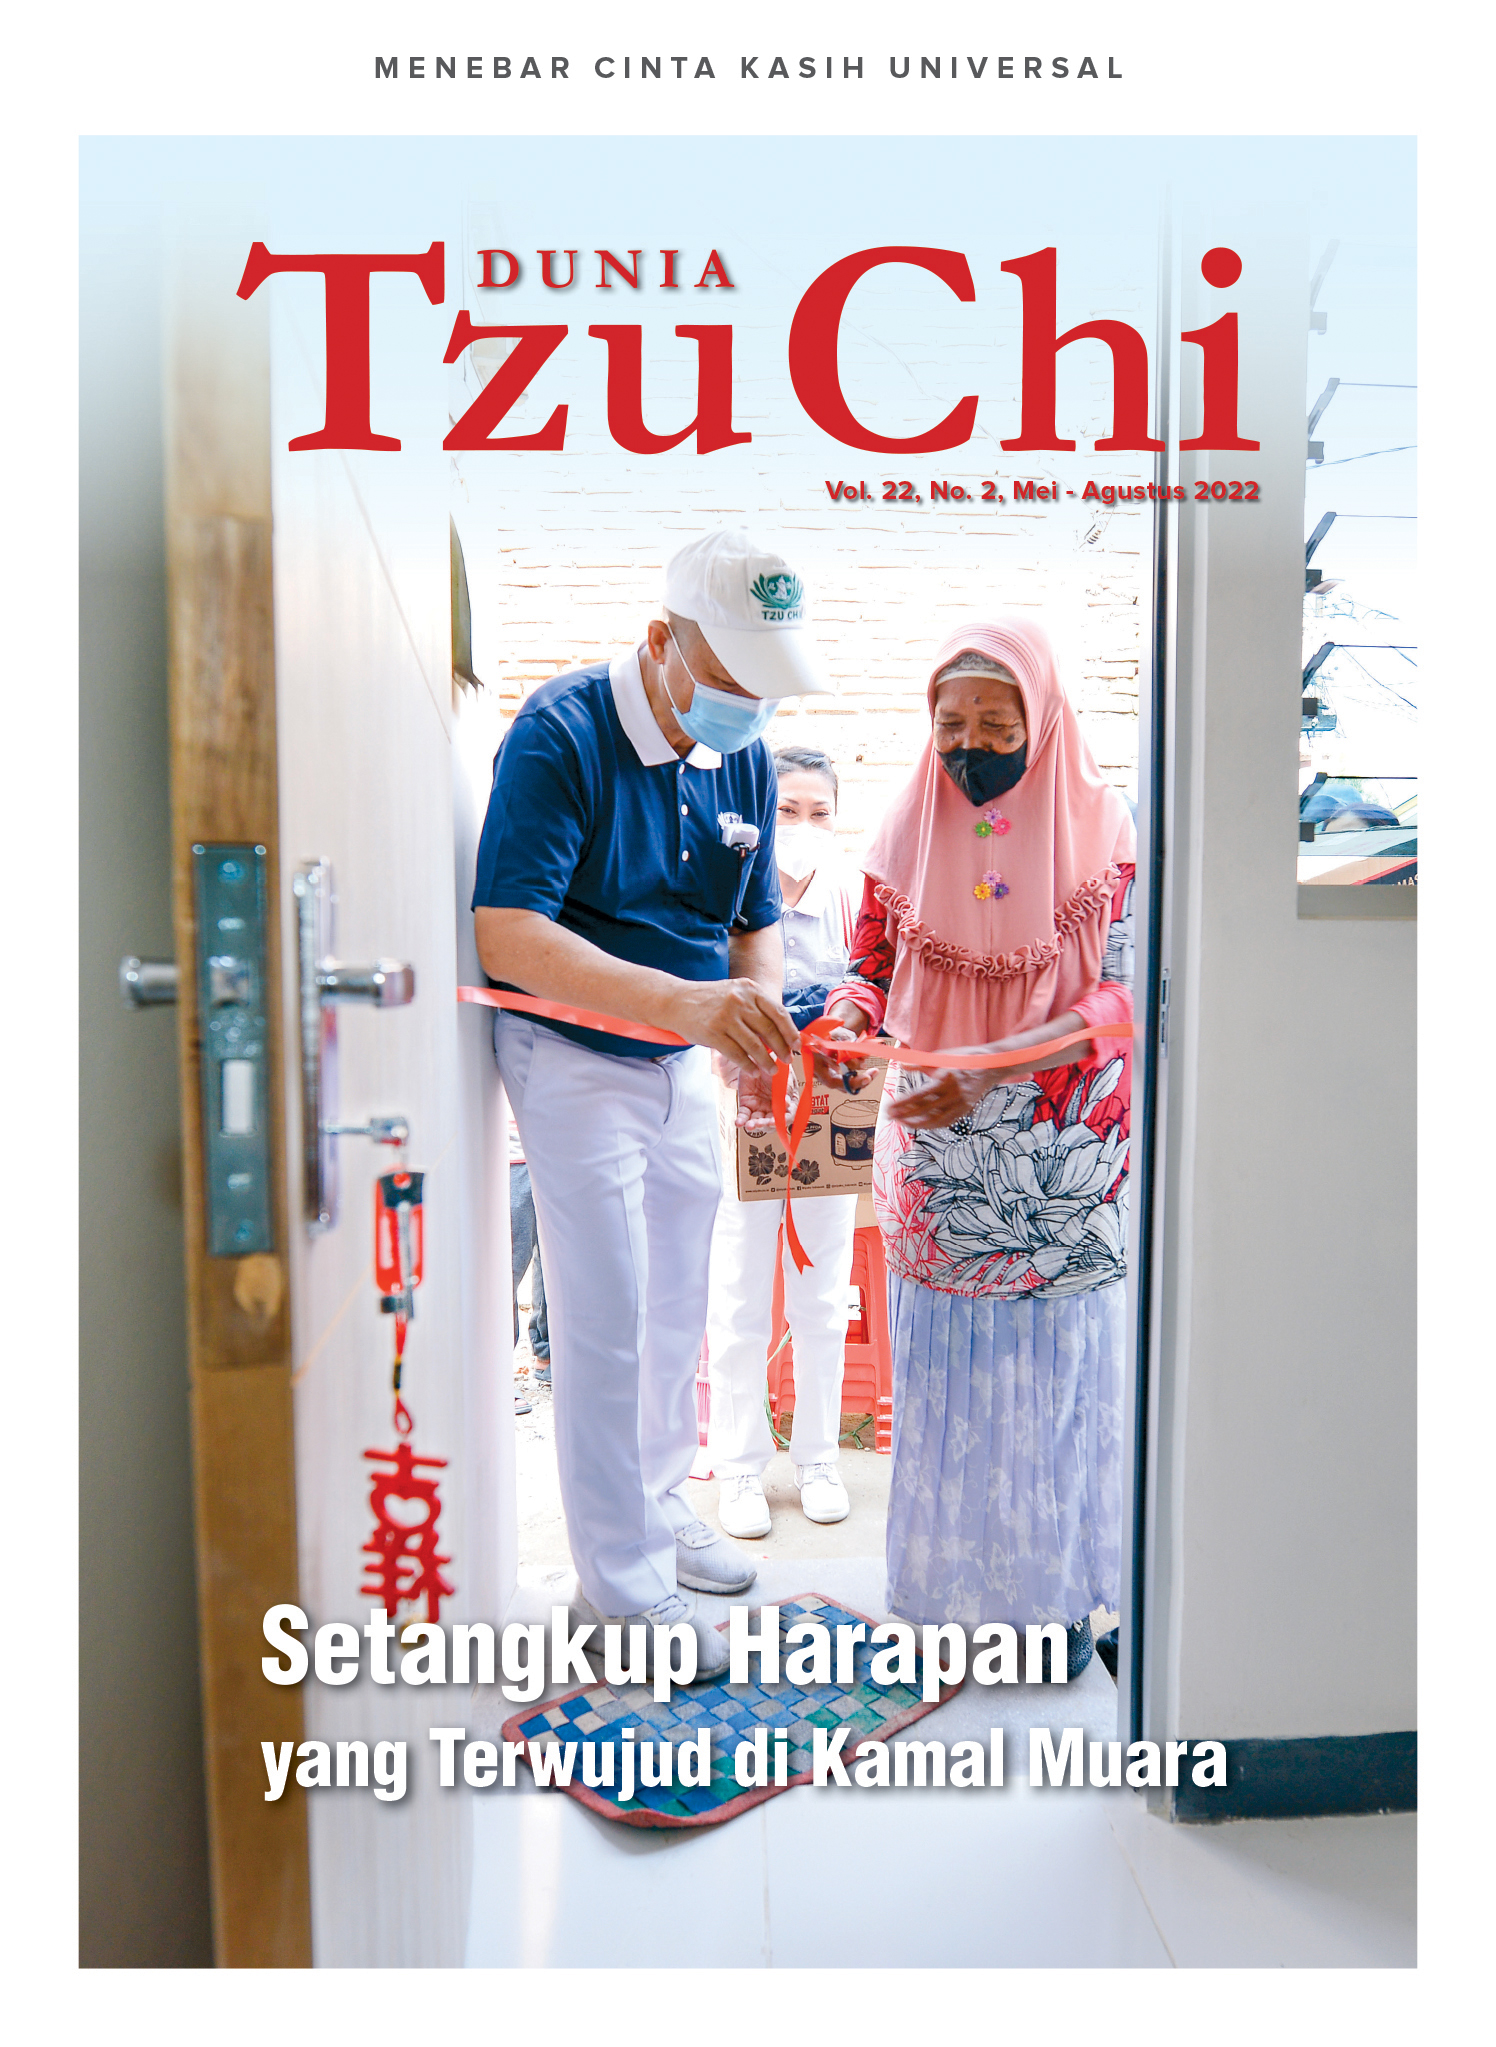 Majalah Dunia Tzu Chi Mei - Agustus 2022